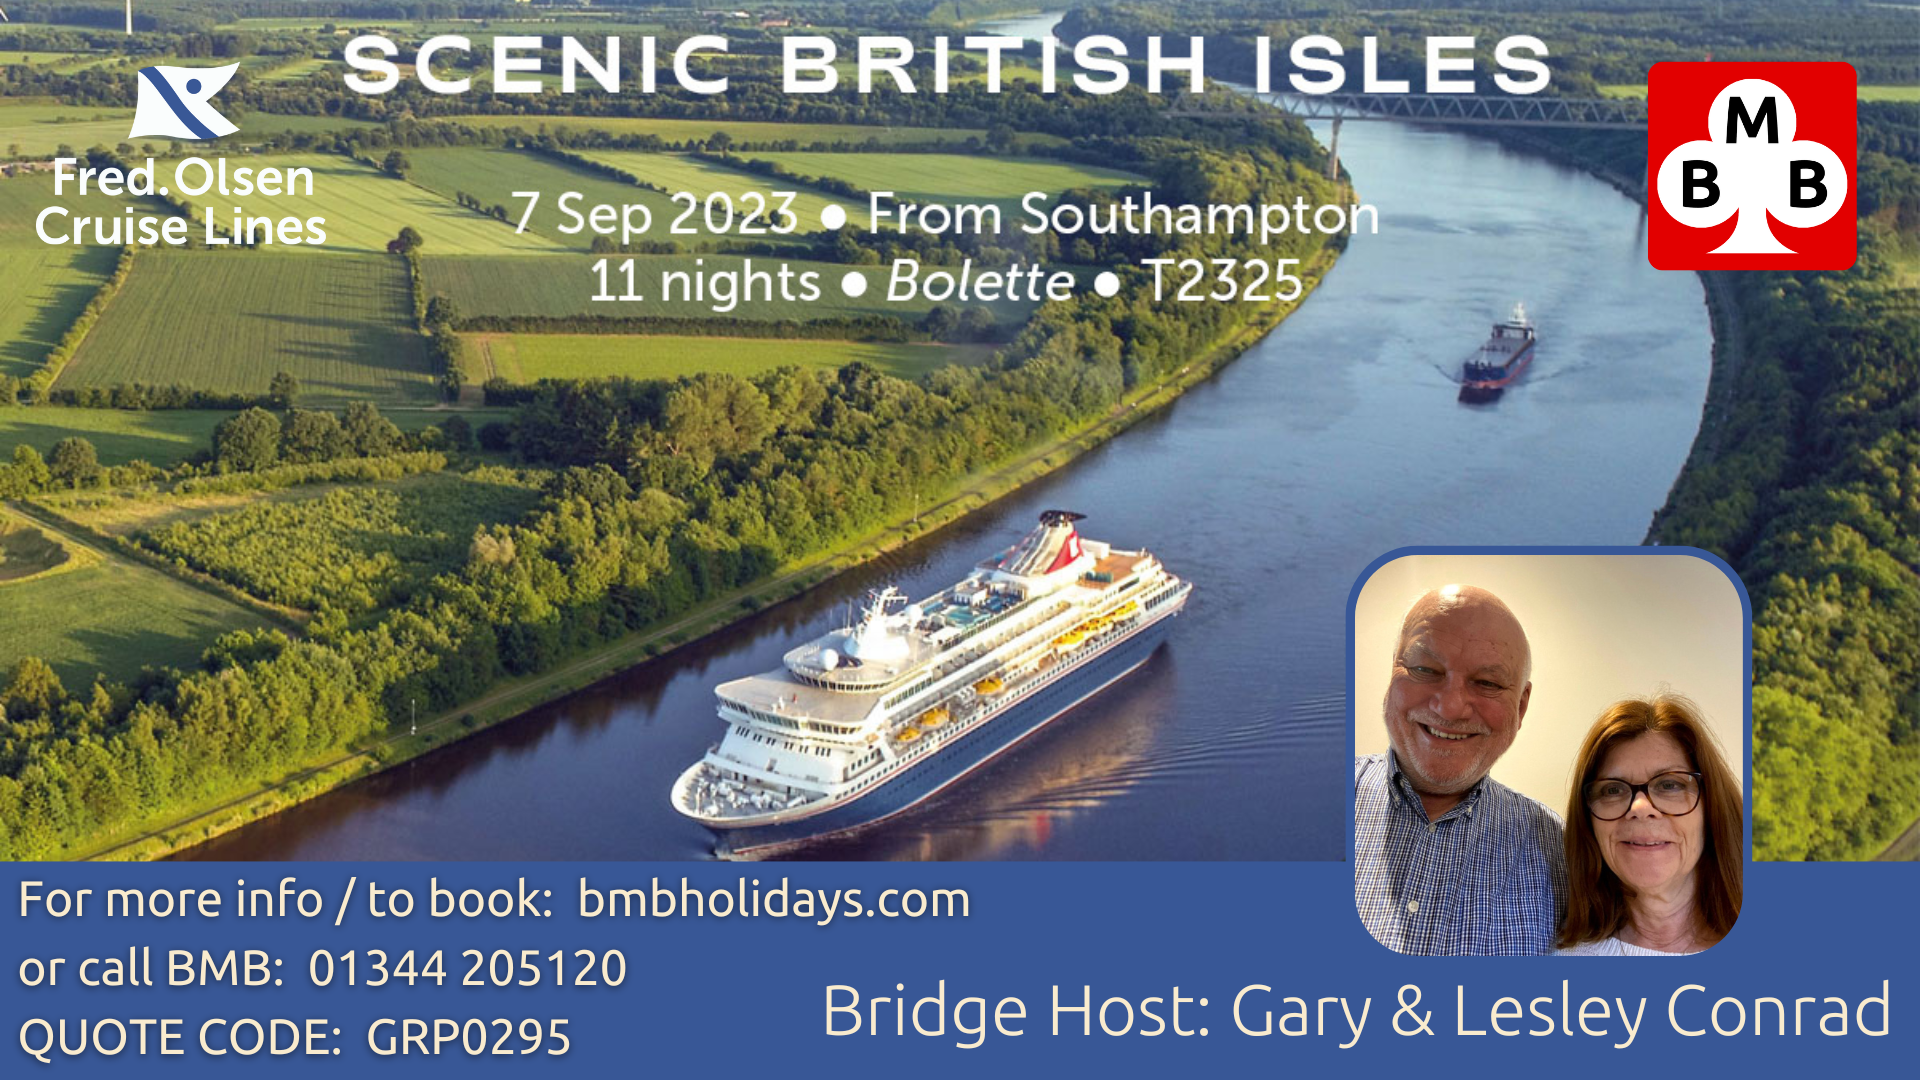 BMB Bridge Holiday - T2325 Scenic British Isles with bridge hosts Gary & Lesley Conrad - FO Cruise